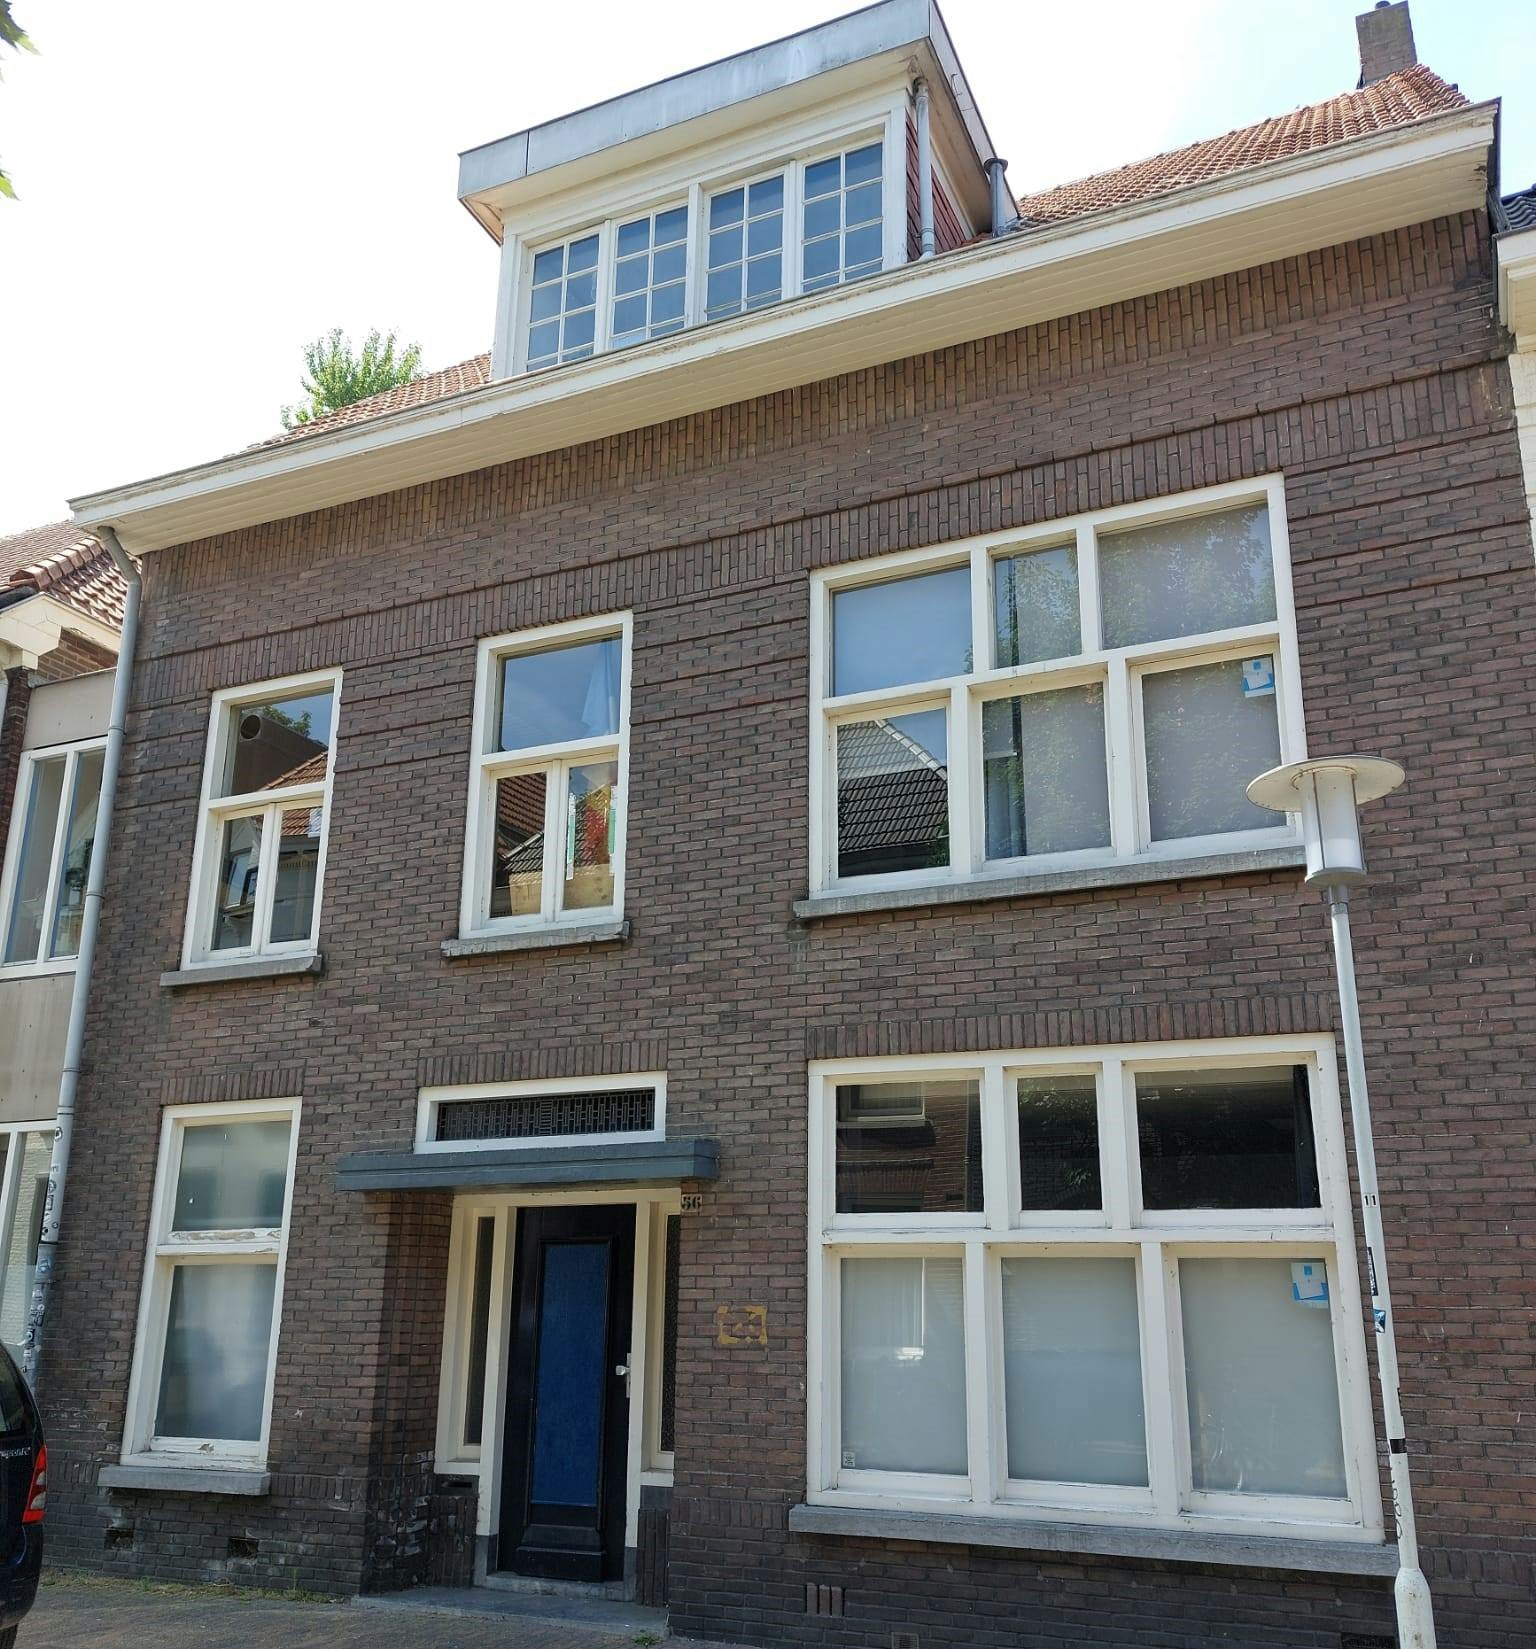 Monoma Haus in Eindhoven